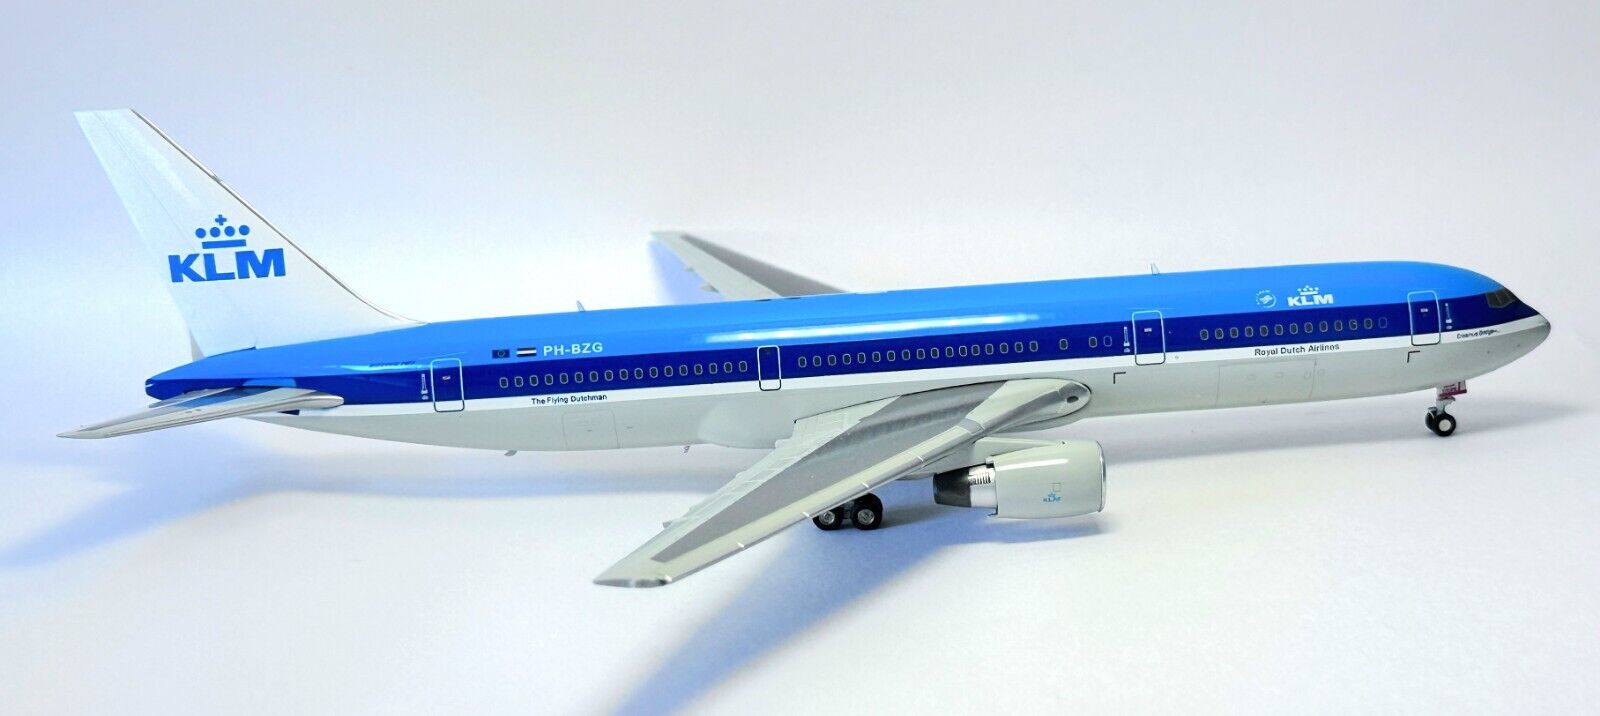 Boeing 767-300 KLM Royal Dutch Airlines Diecast Model Scale 1:200 PH-BZG